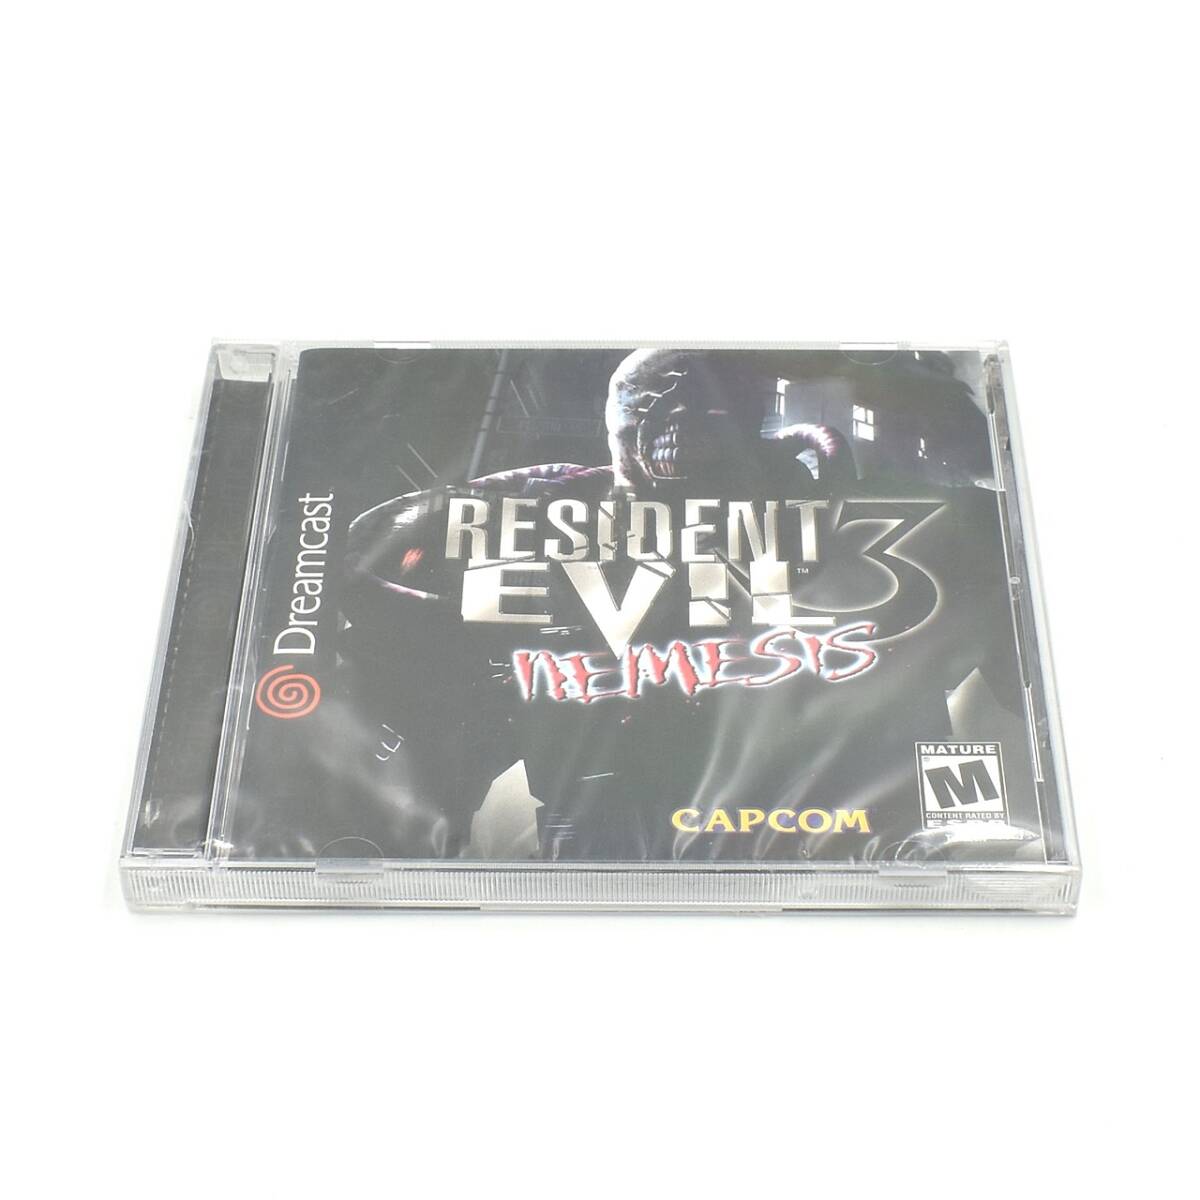 Resident Evil 3: Nemesis 北米版 セガ ドリームキャスト ドリキャス SEGA Dreamcast バイオハザード3 LAST ESCAPE BIOHAZARD 3 新品未開封